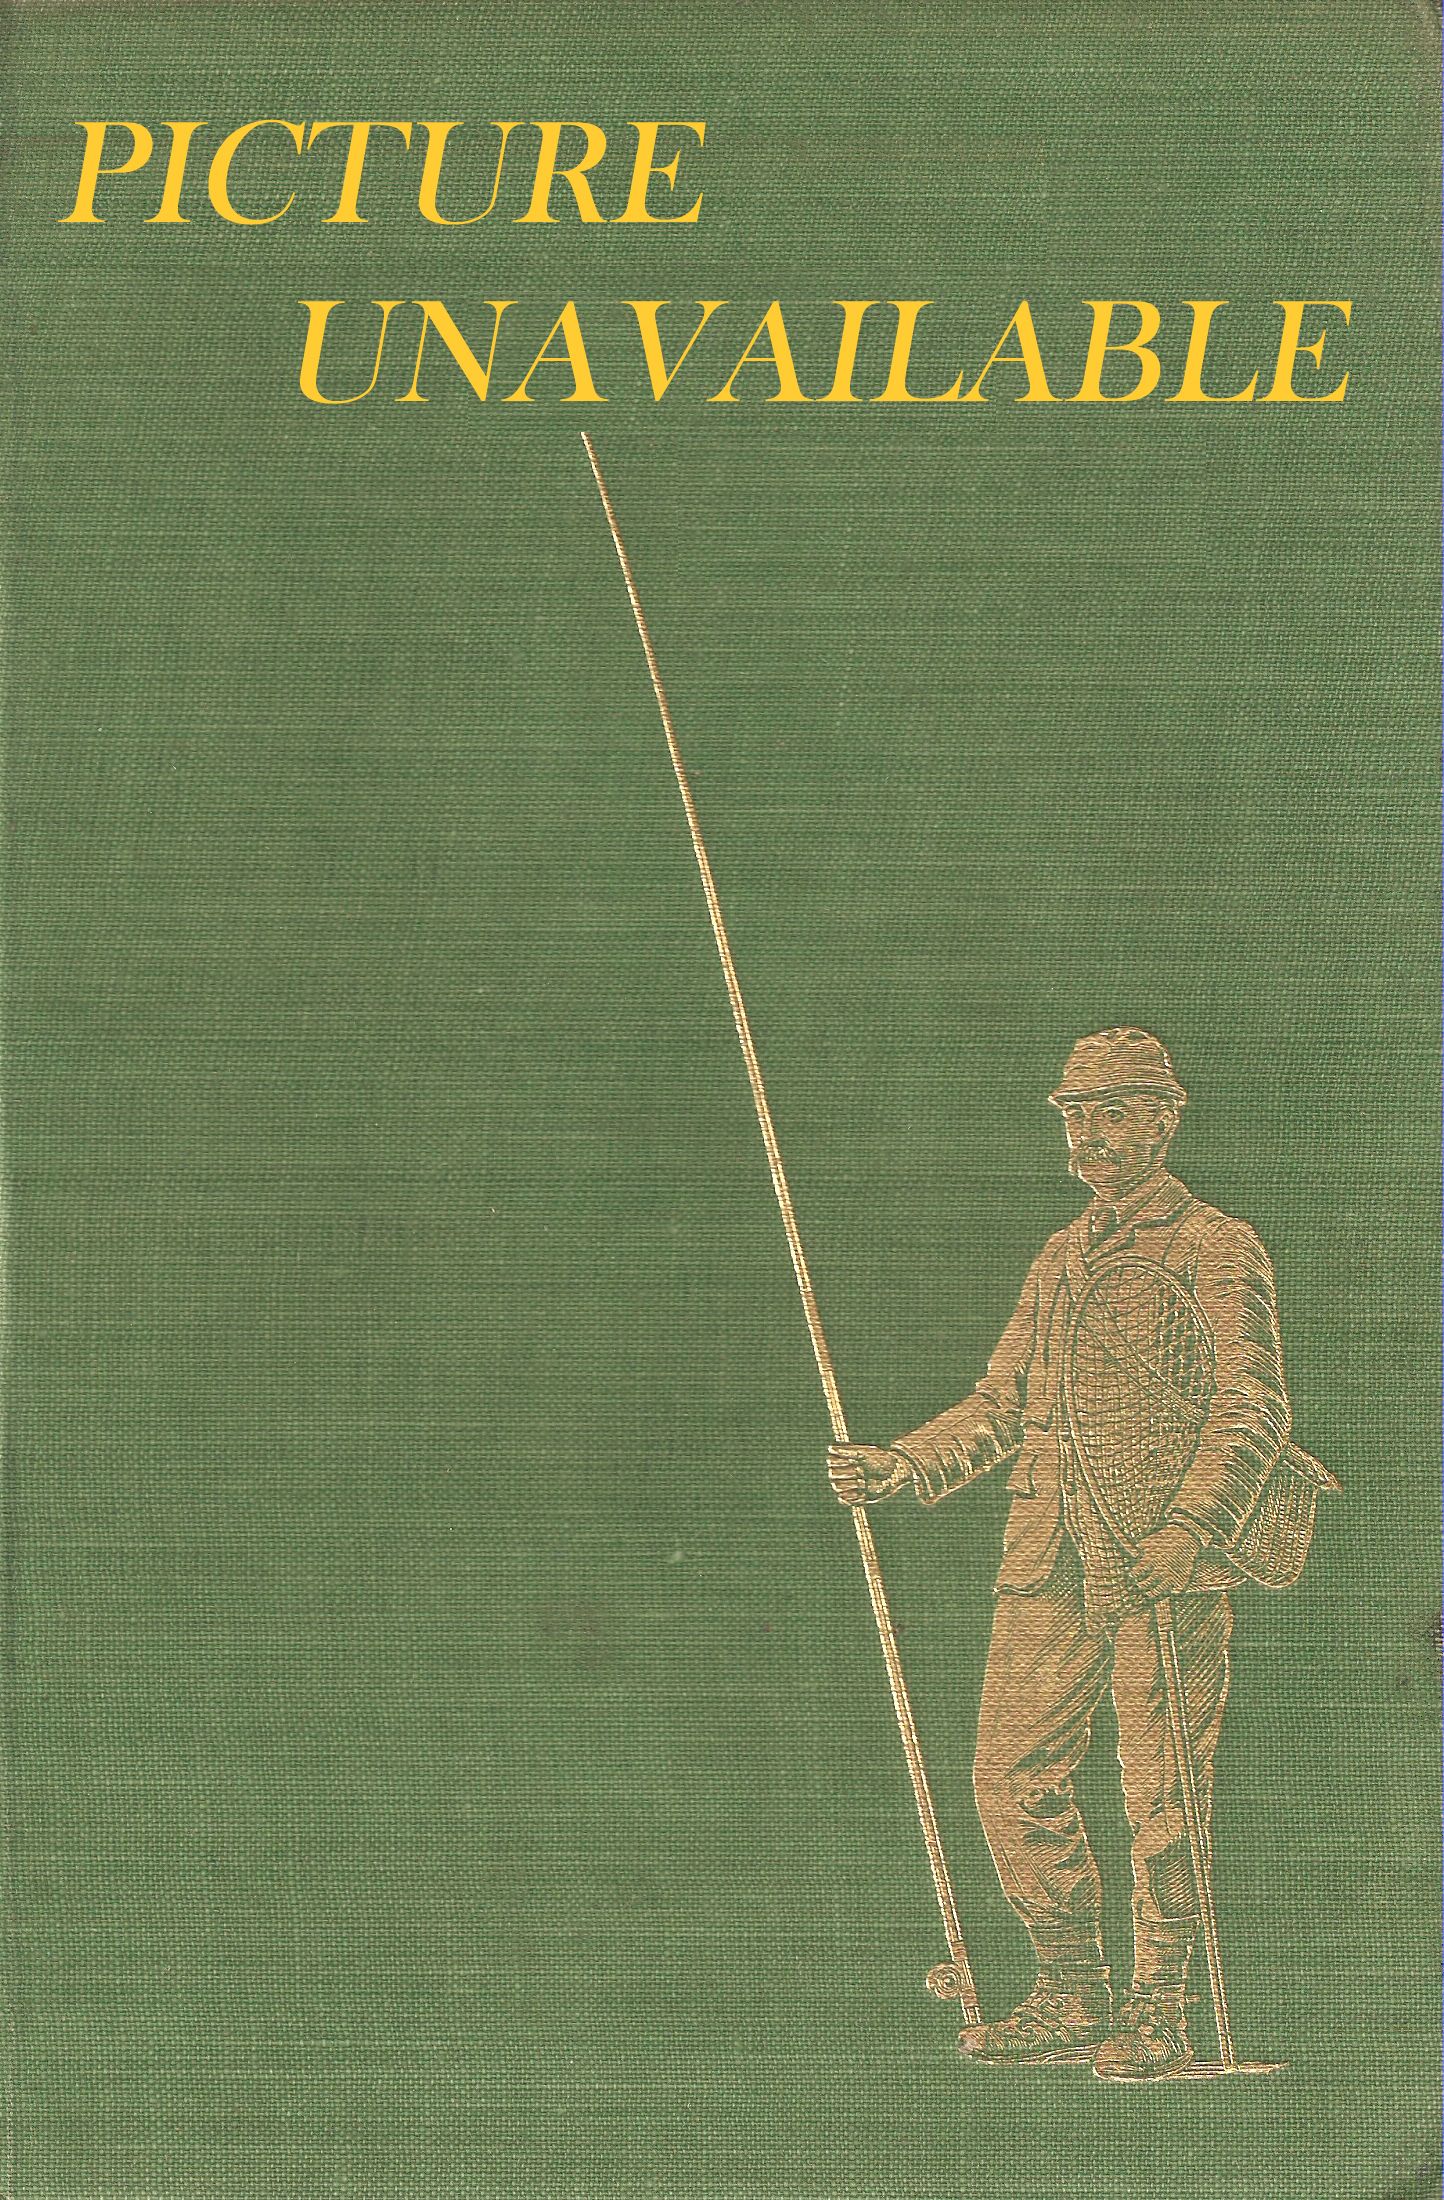 CREEL: A FISHING MAGAZINE. Volume 2, number 12. June 1965.